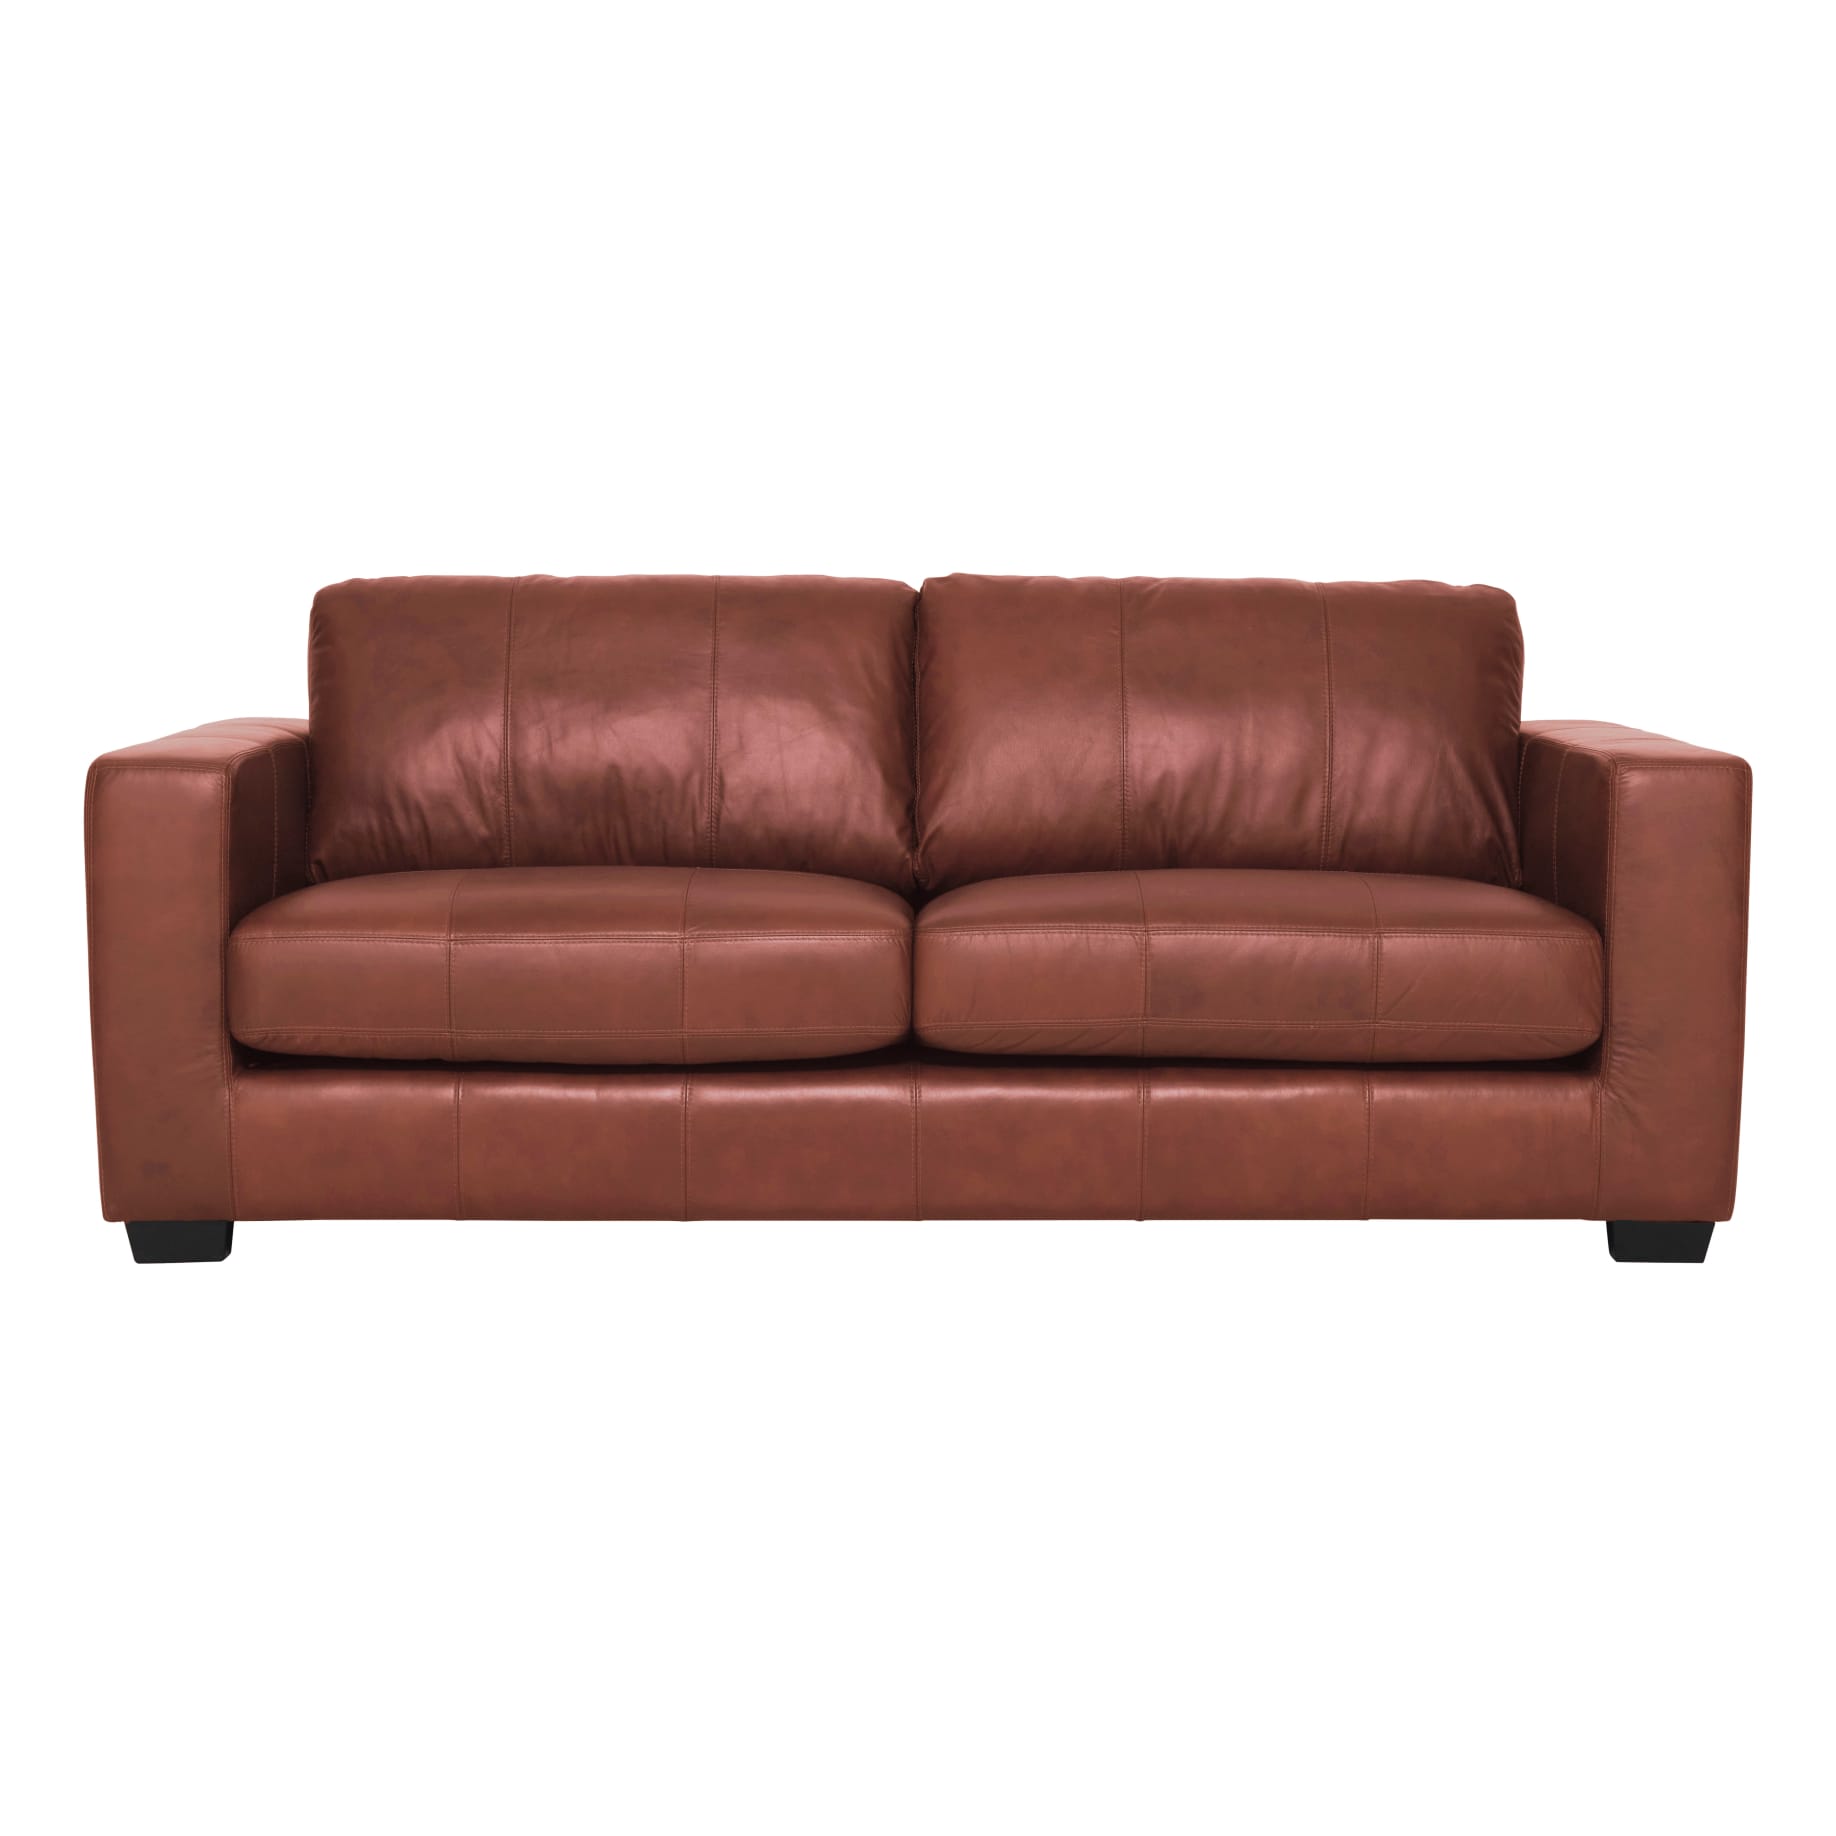 Gordon 3 Seater Sofa in Aniline Leather Cognac